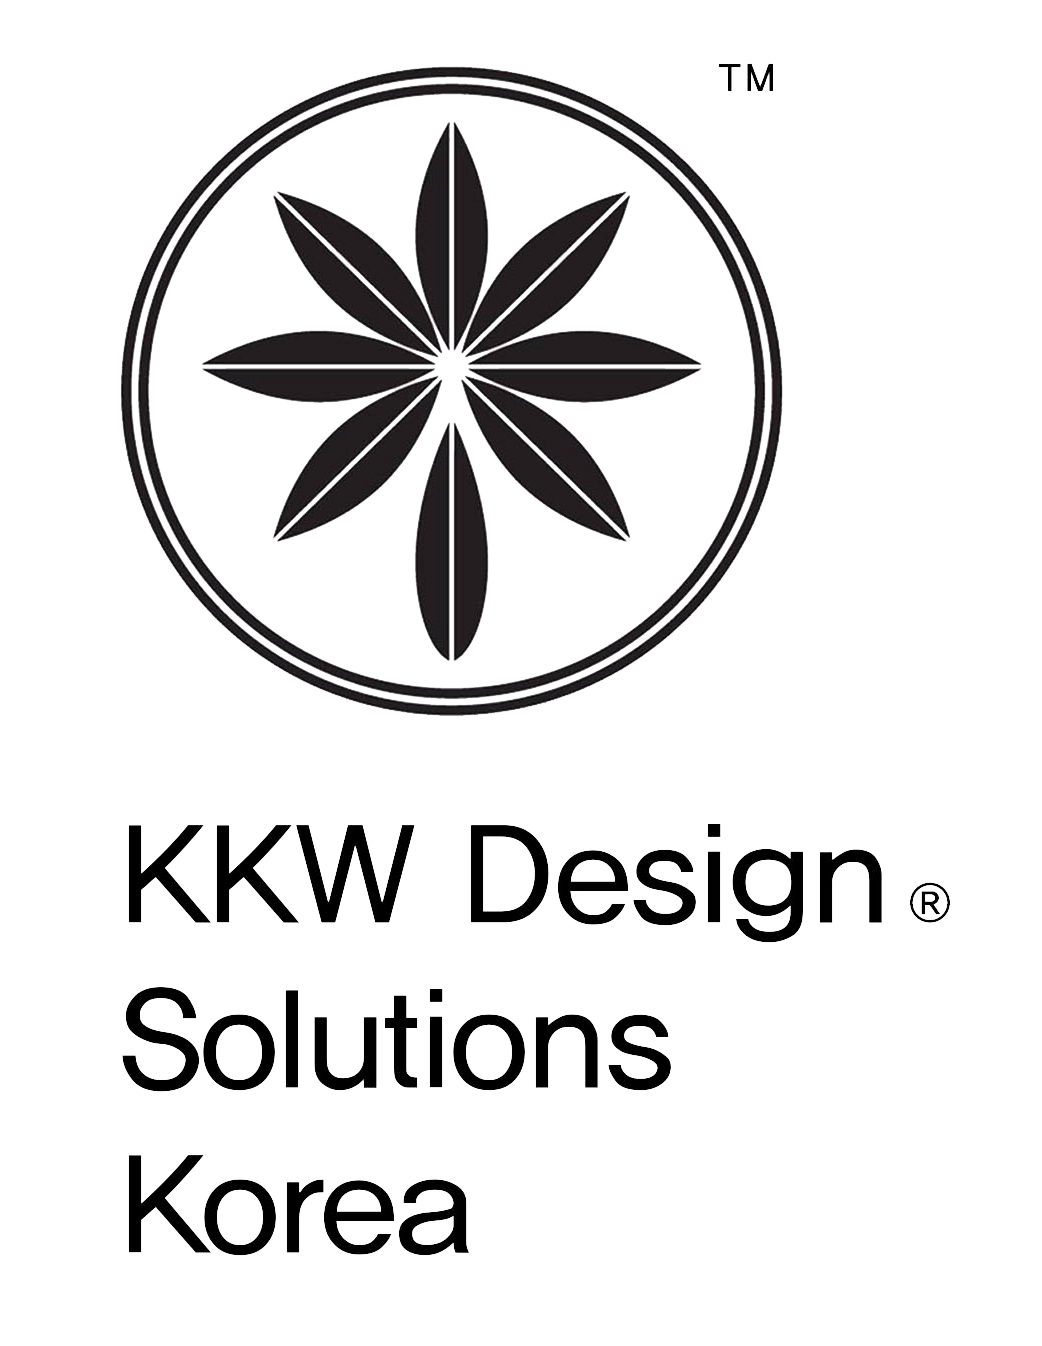 kkw design solutions Korea